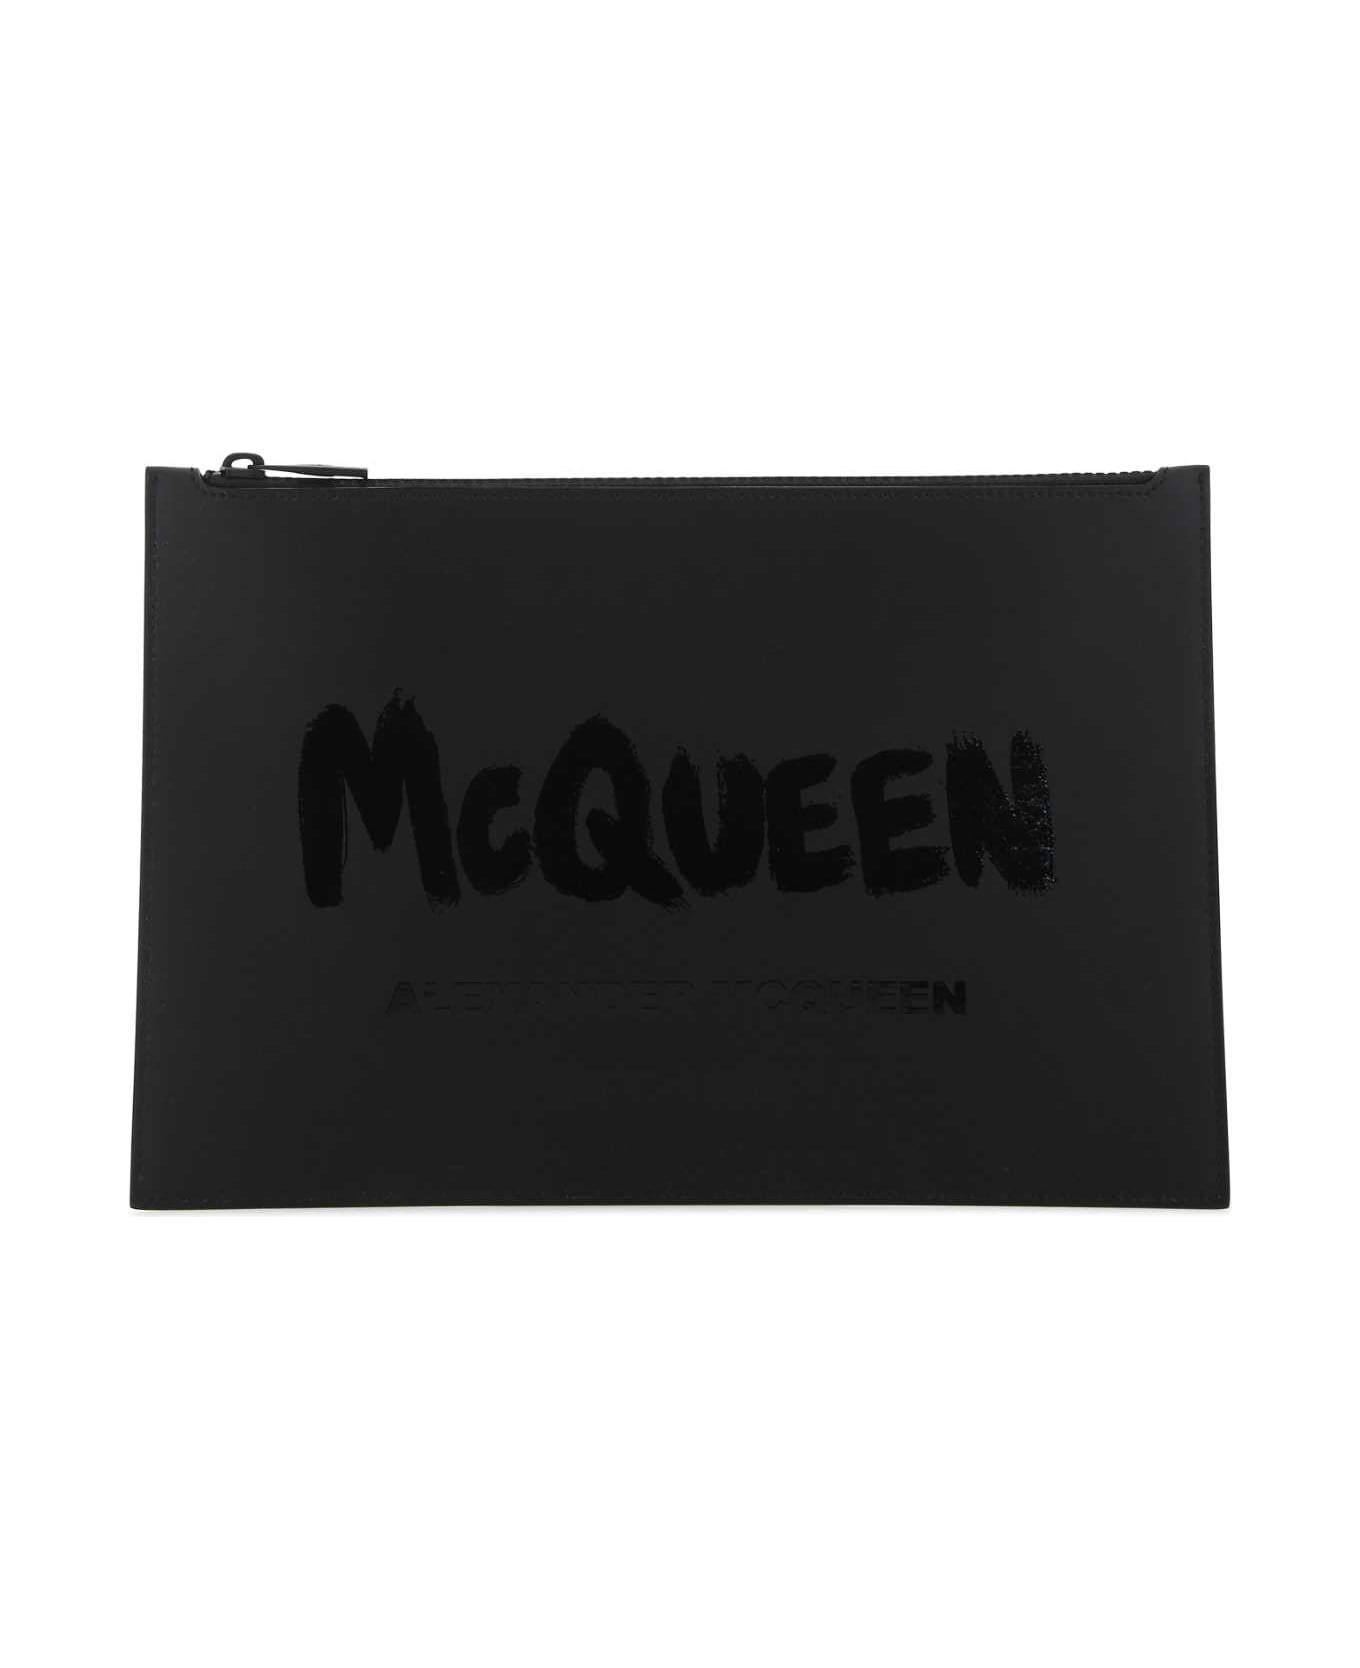 Alexander McQueen Black Leather Clutch - 1000